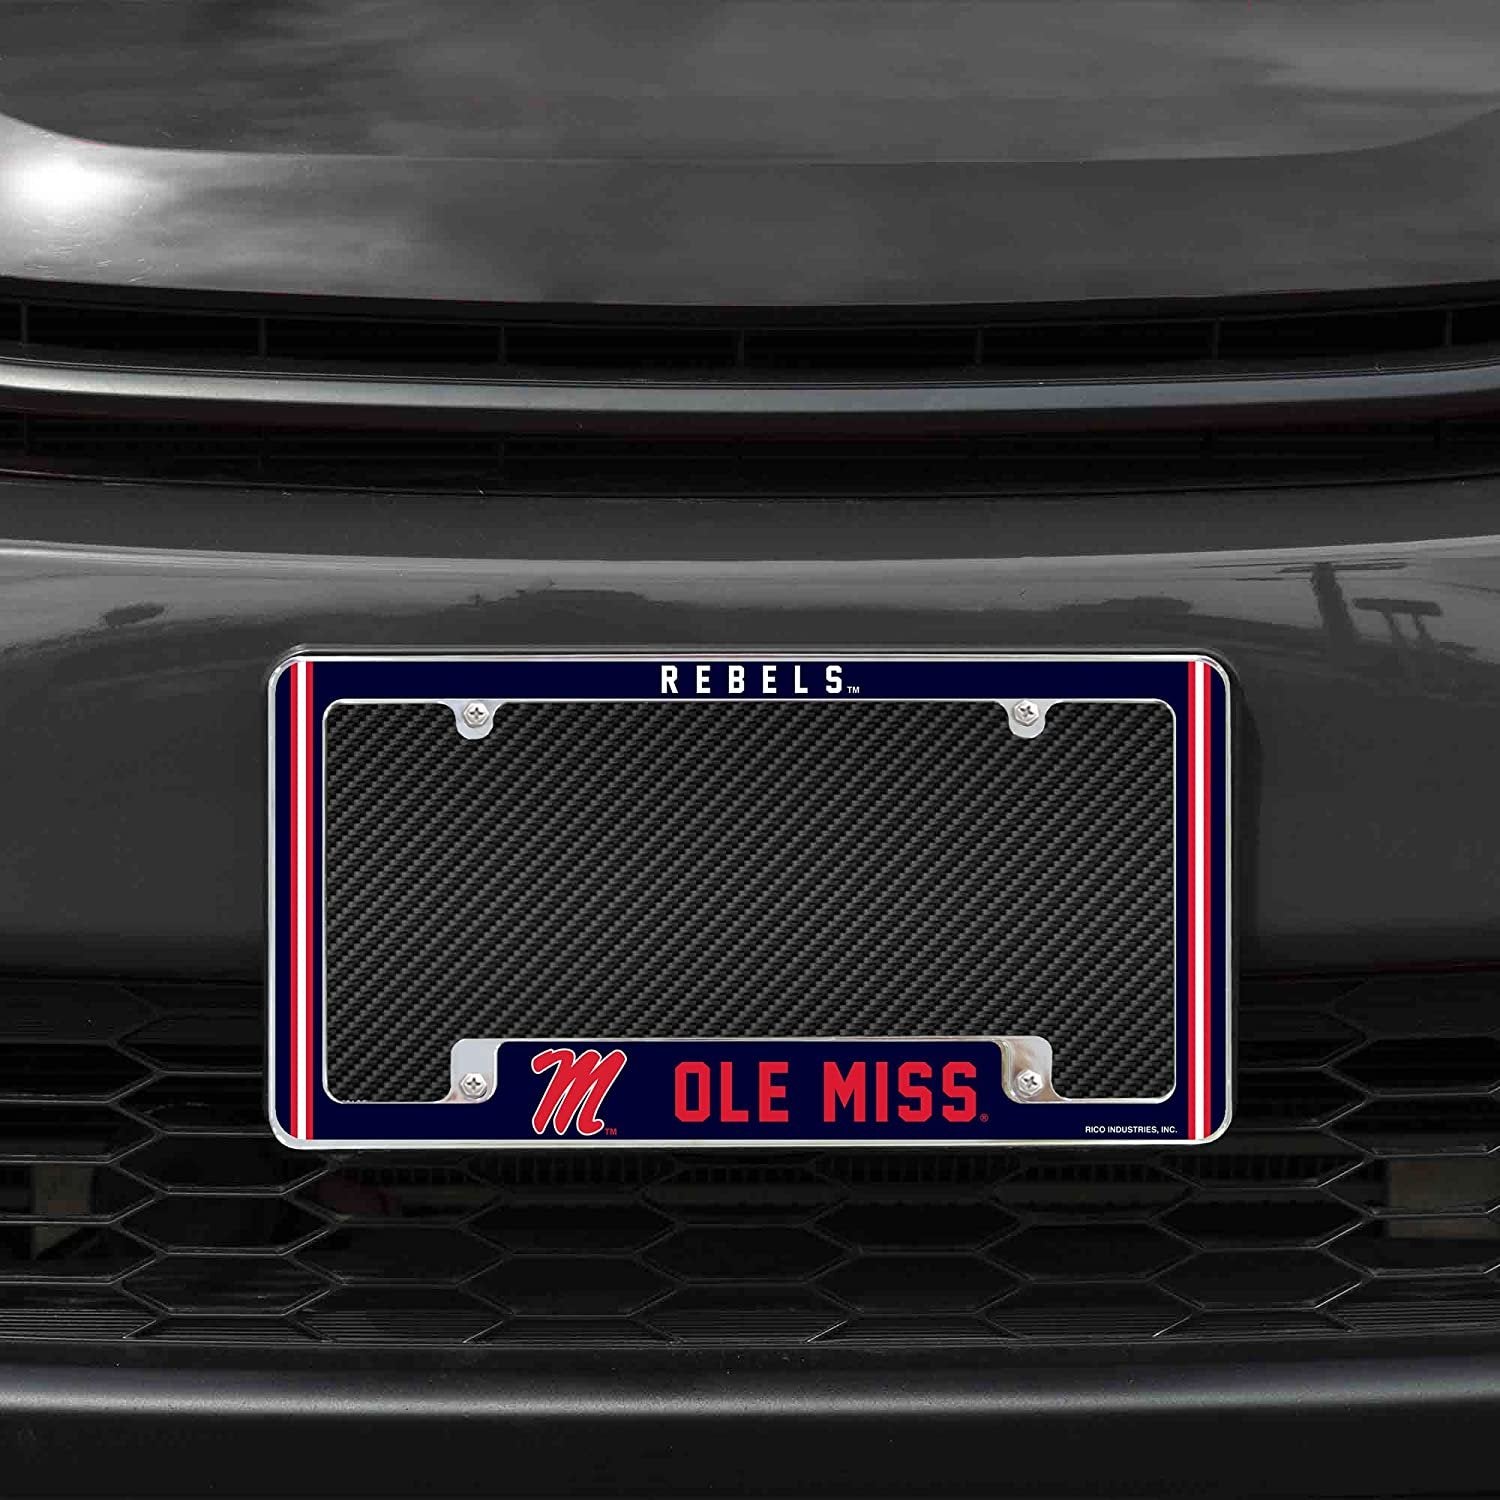 University of Mississippi Rebels Ole Miss Metal License Plate Frame Chrome Tag Cover Alternate Design 6x12 Inch